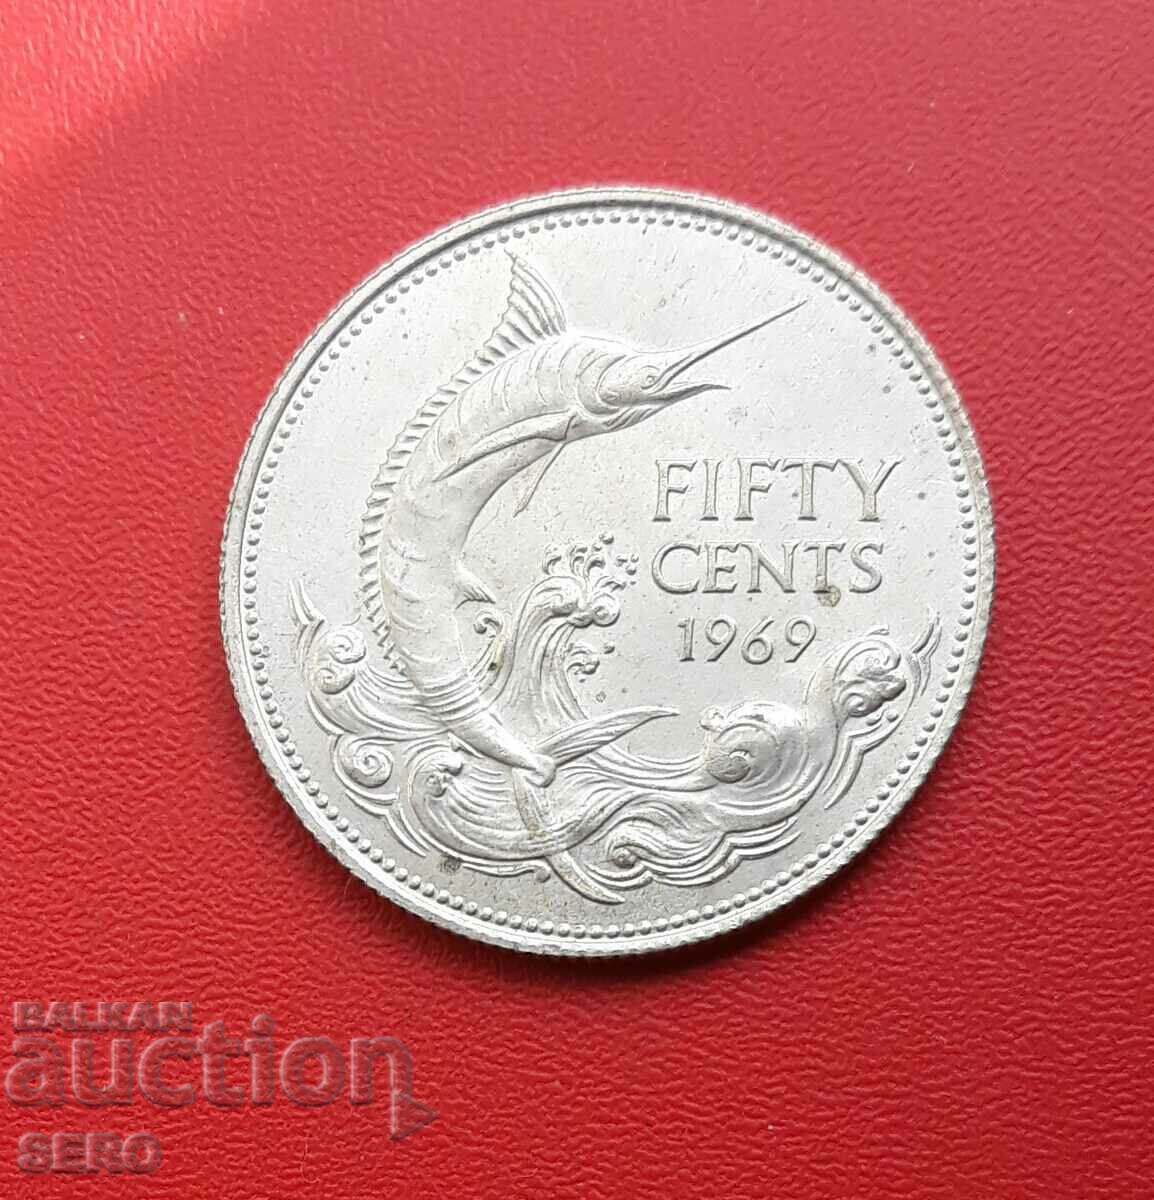 Bahamas-50 cents 1969-silver and very rare